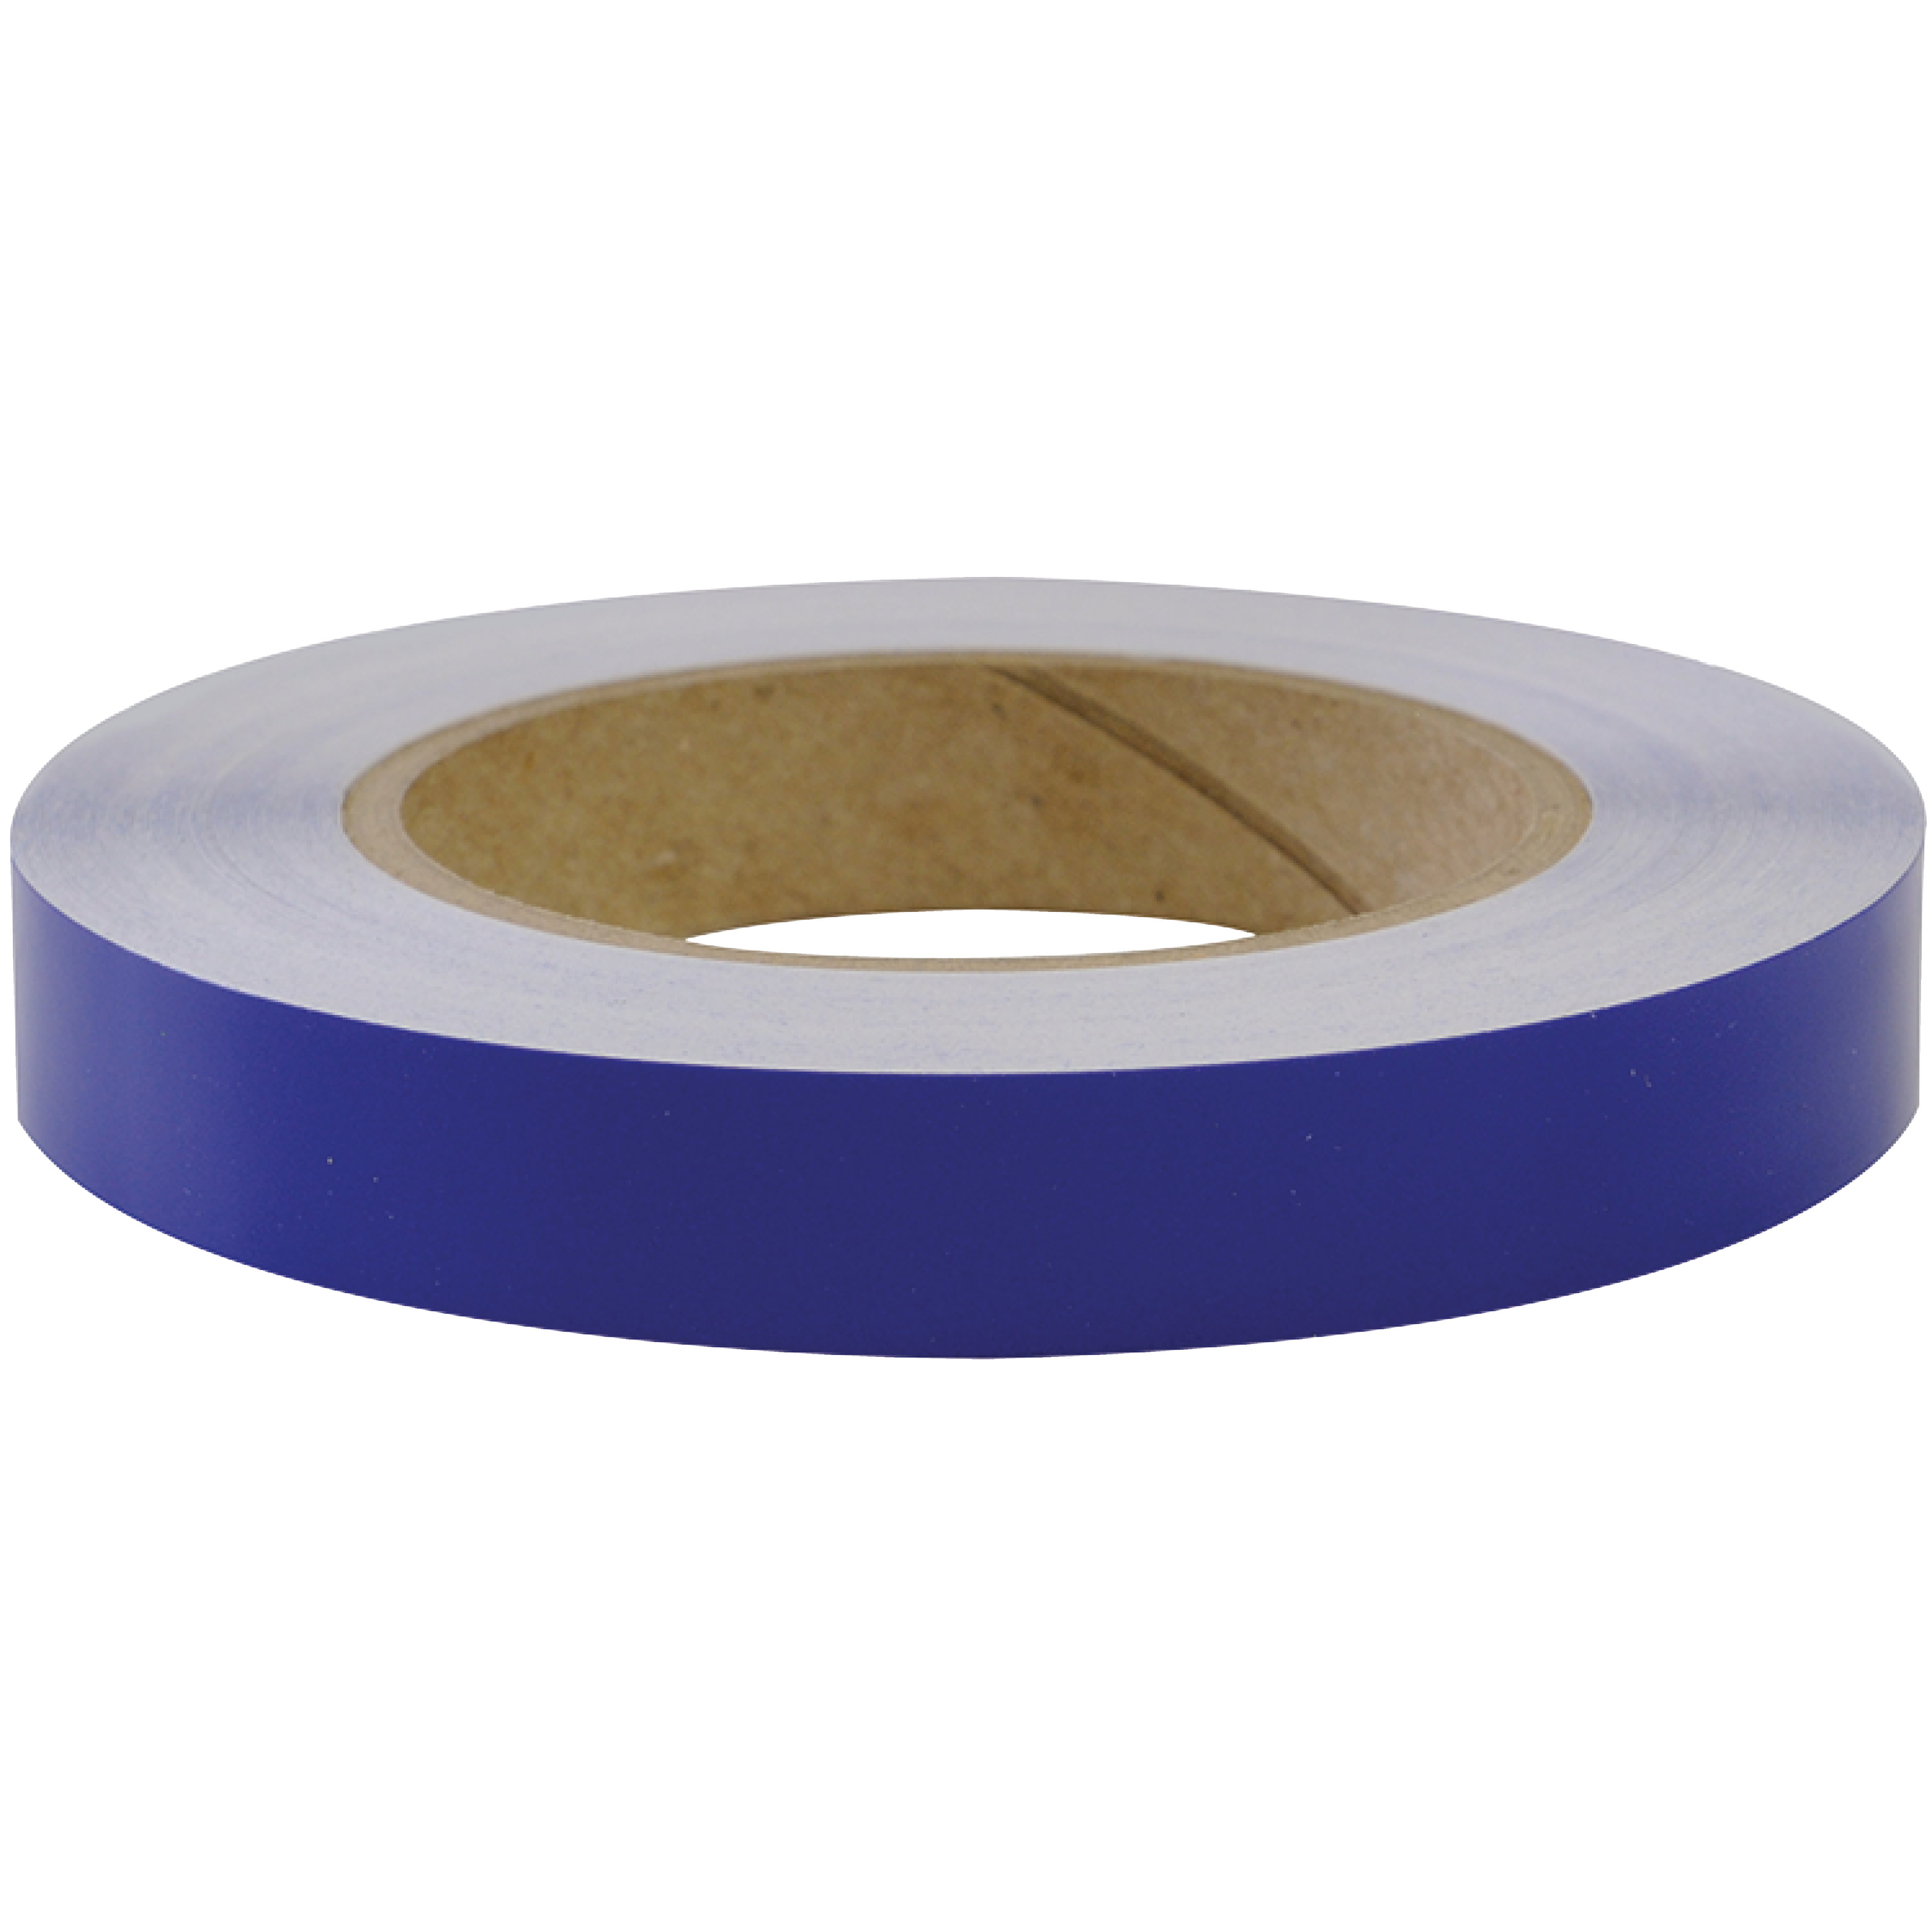 Seachoice 77937 Self-Adhesive Boat Striping Tape 1/2 Inch x 50 Feet 3 Mil Vinyl Blue